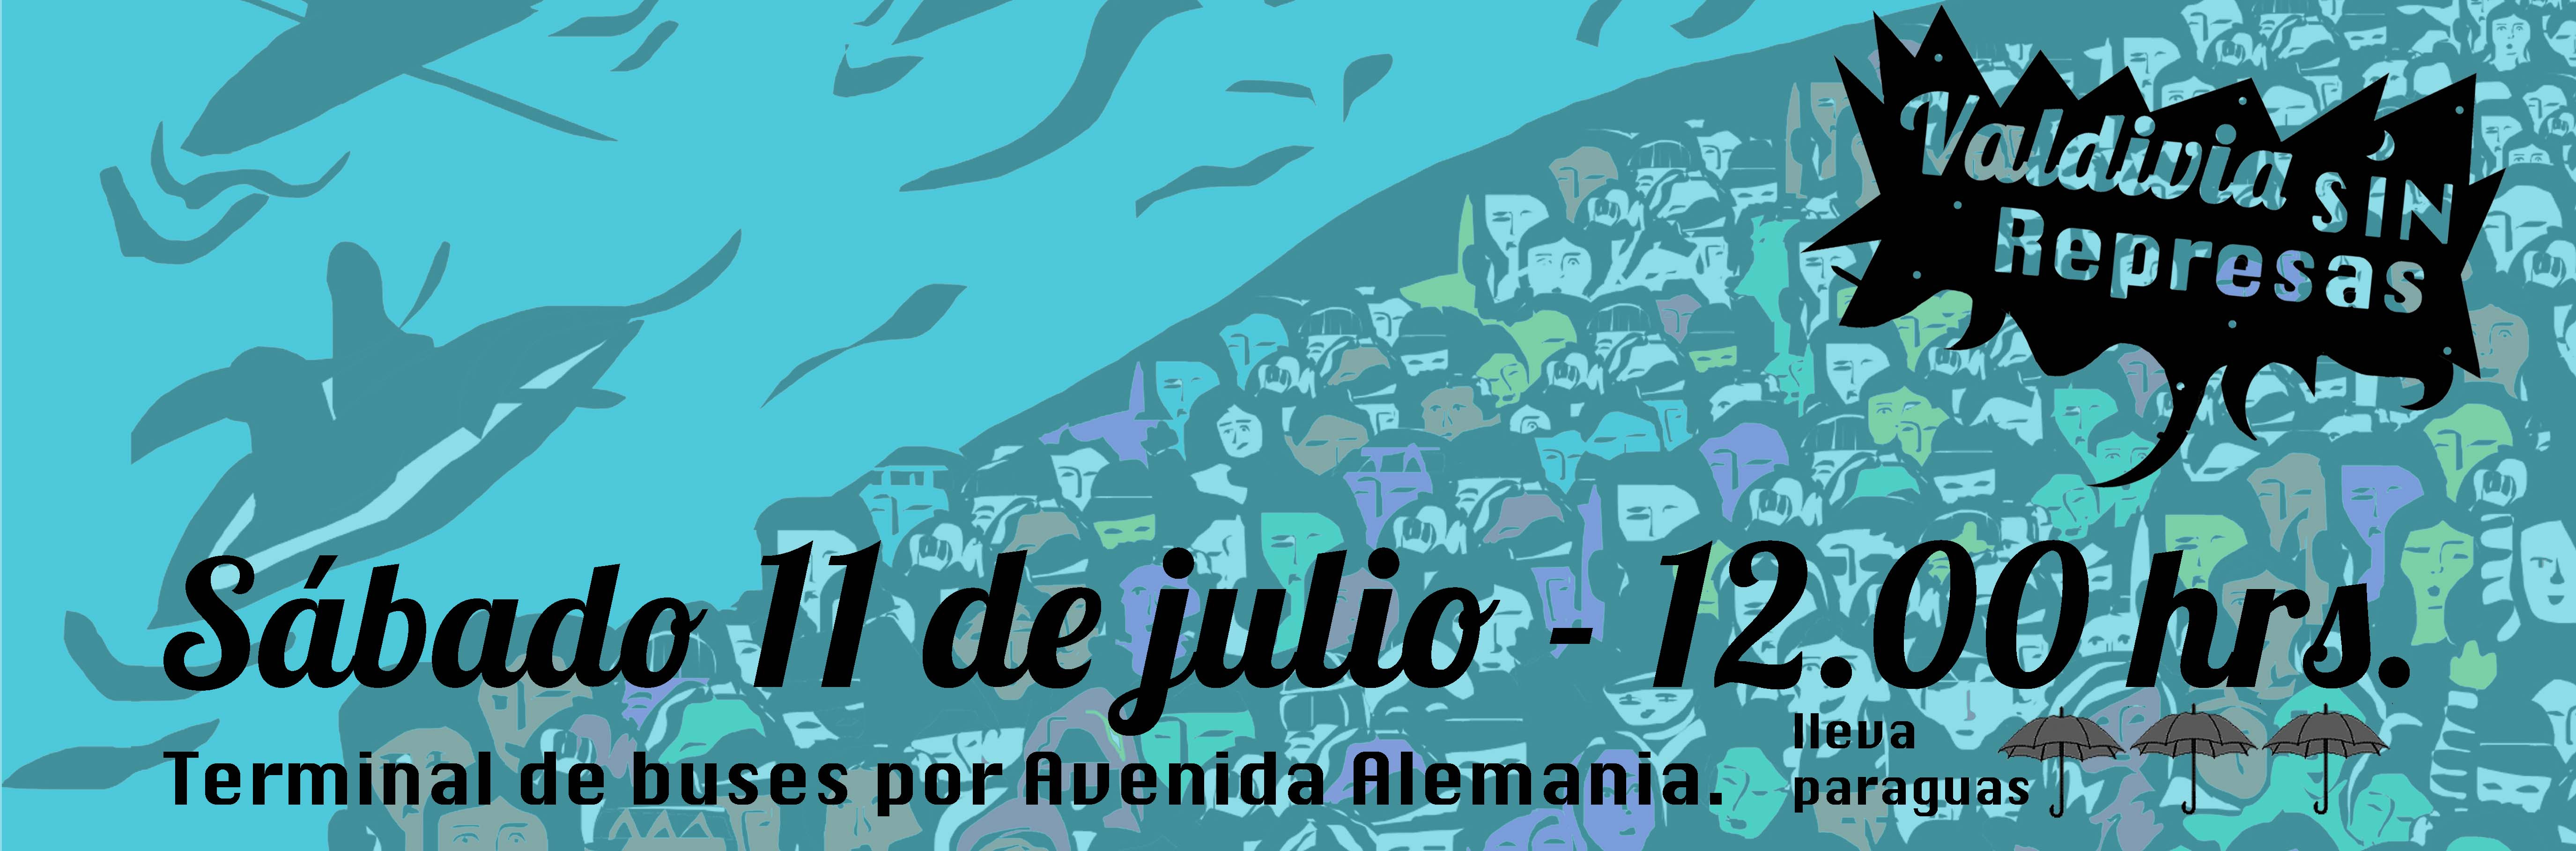 «Valdivia Sin Represa» alista marcha contra la Central San Pedro de Colbún